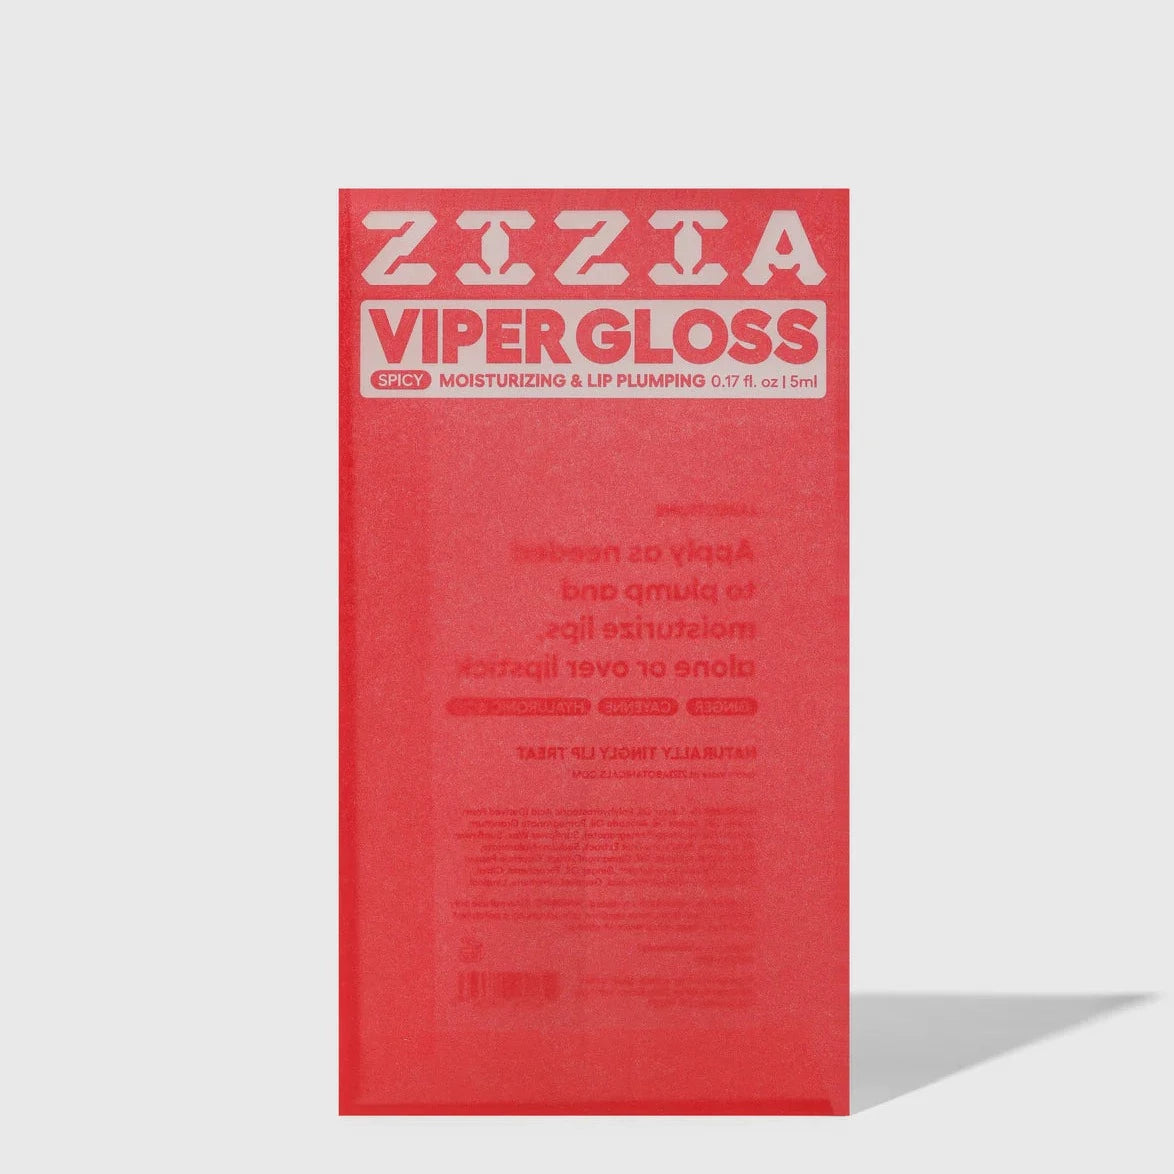 Zizia Viper Gloss available at Rook & Rose.